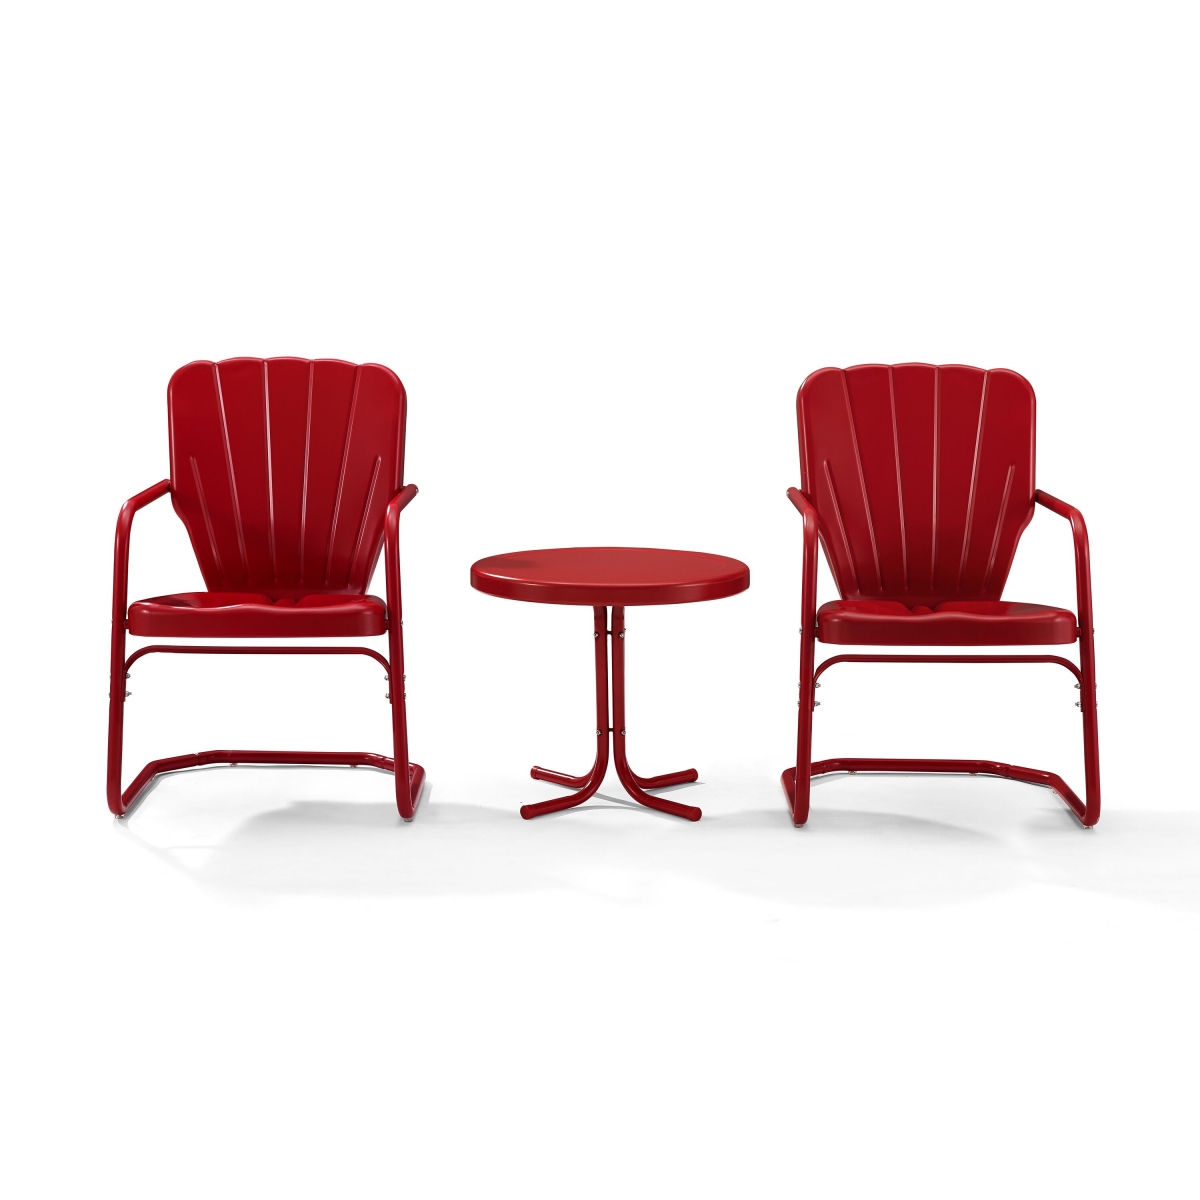 Claustro Ridgeland 3 Piece Metal Conversation Seating Set in Bright Red Gloss